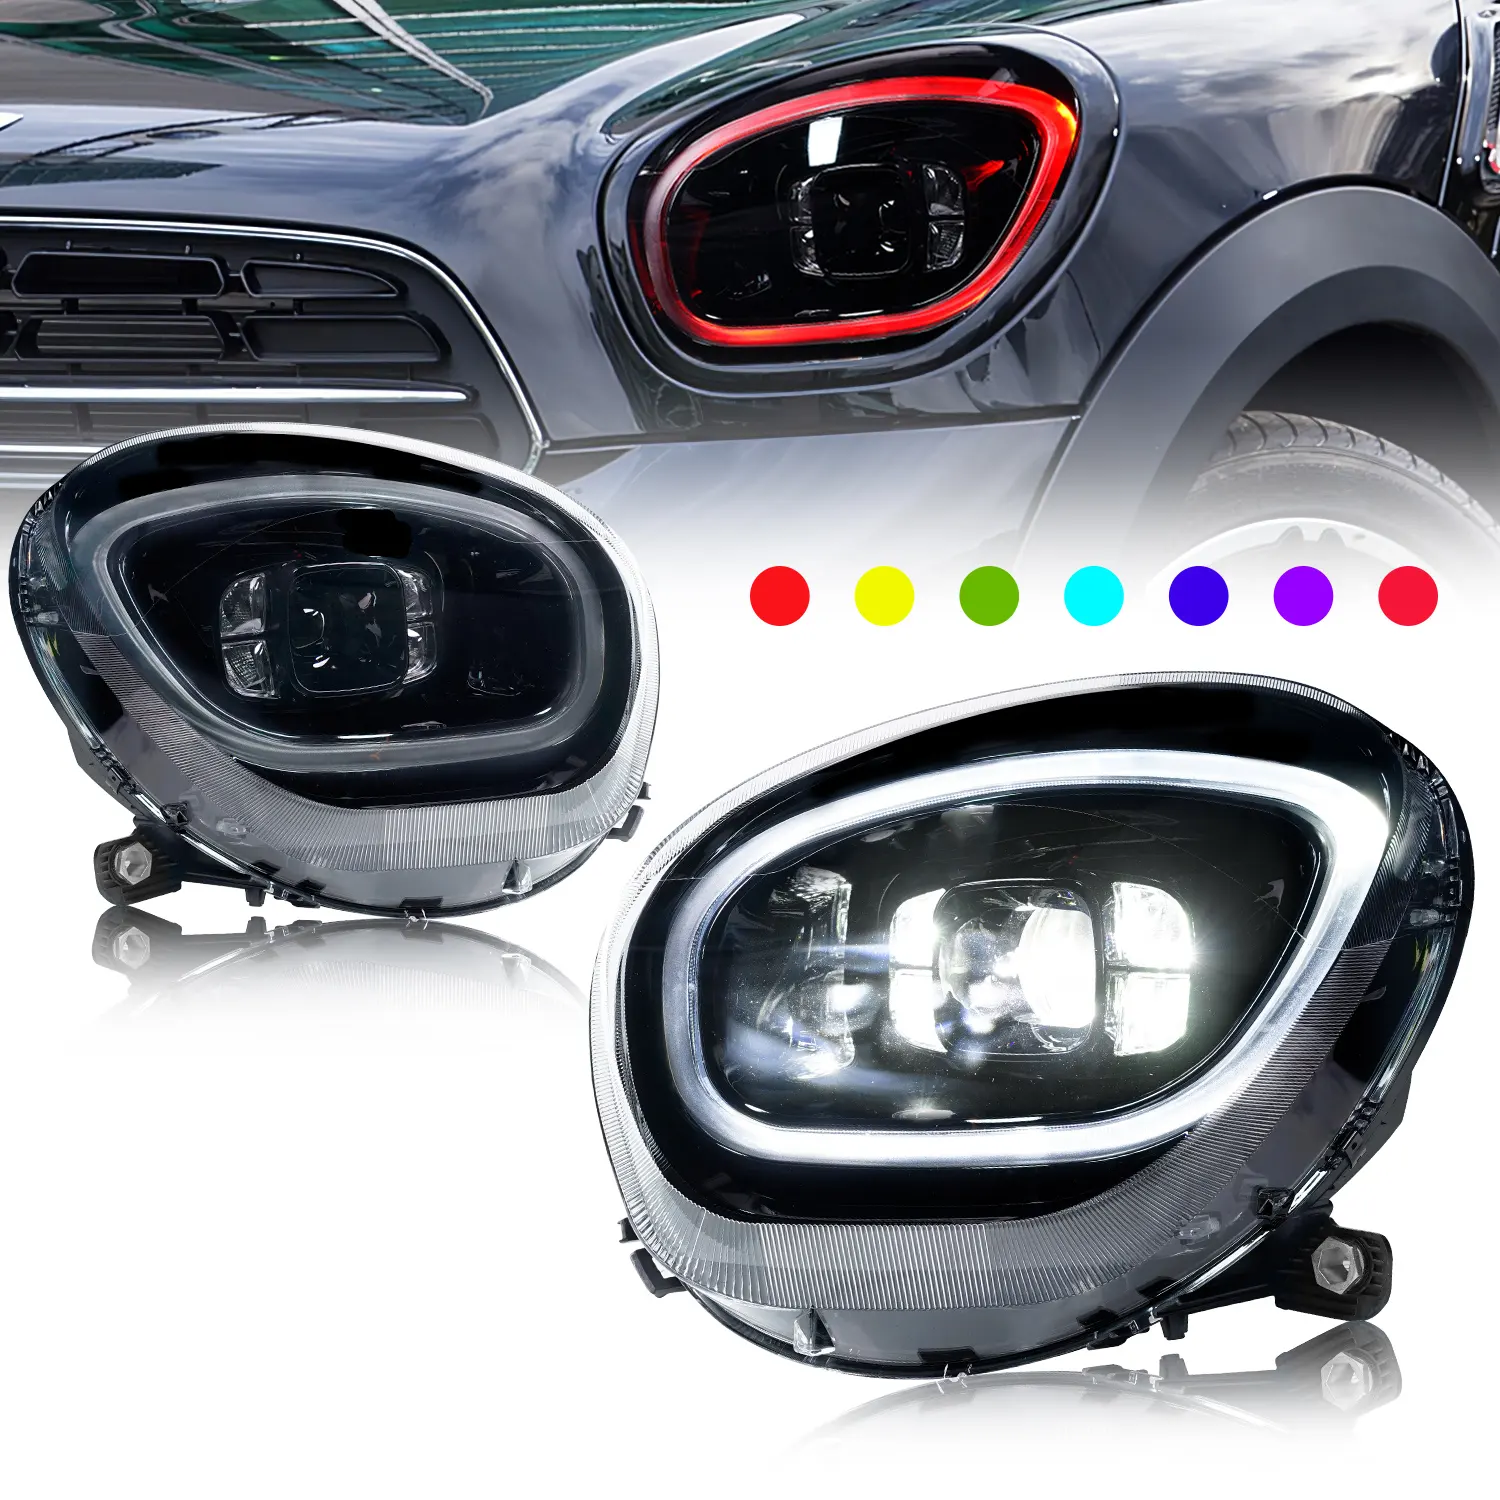 New RGB Led Headlight For Mini R60 Cooper 2011-2016 Led Light With Daily Light high beam lower beam Head Lamp